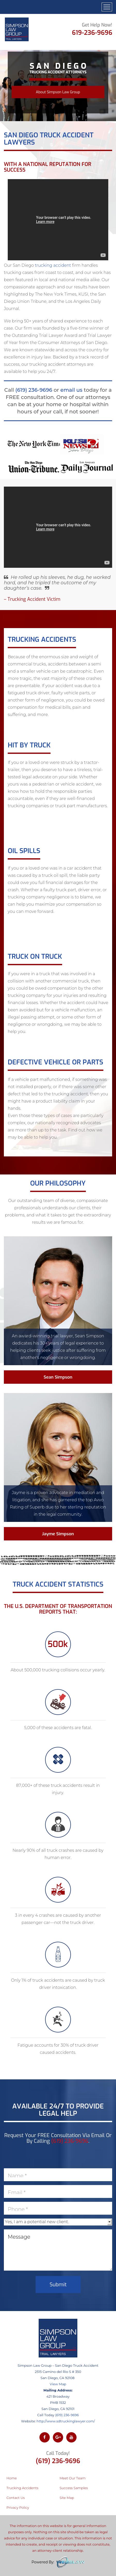 Simpson-Myrick, LLP - San Diego CA Lawyers